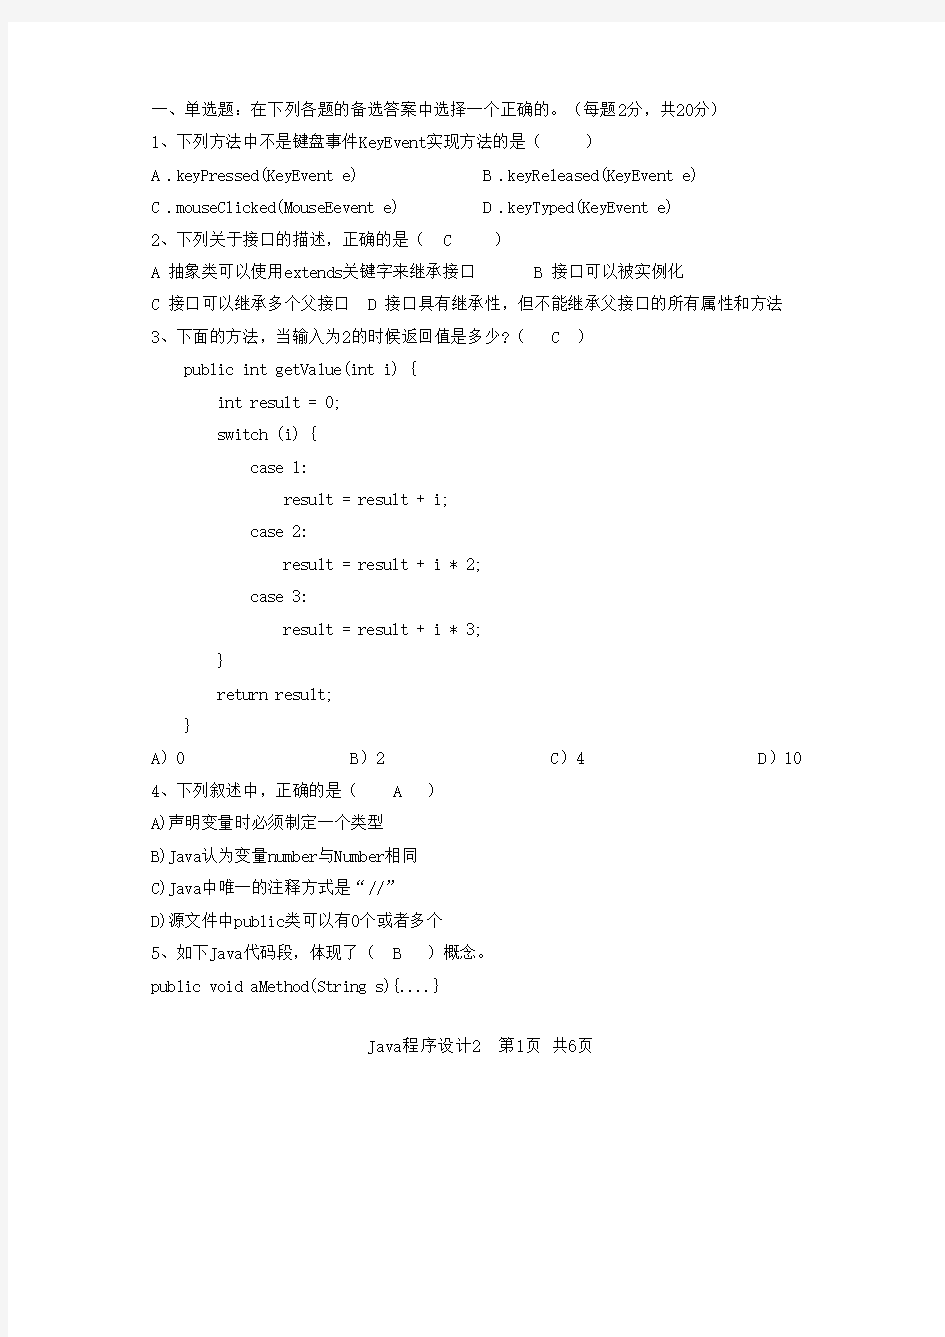 Java程序设计复习题 (1)